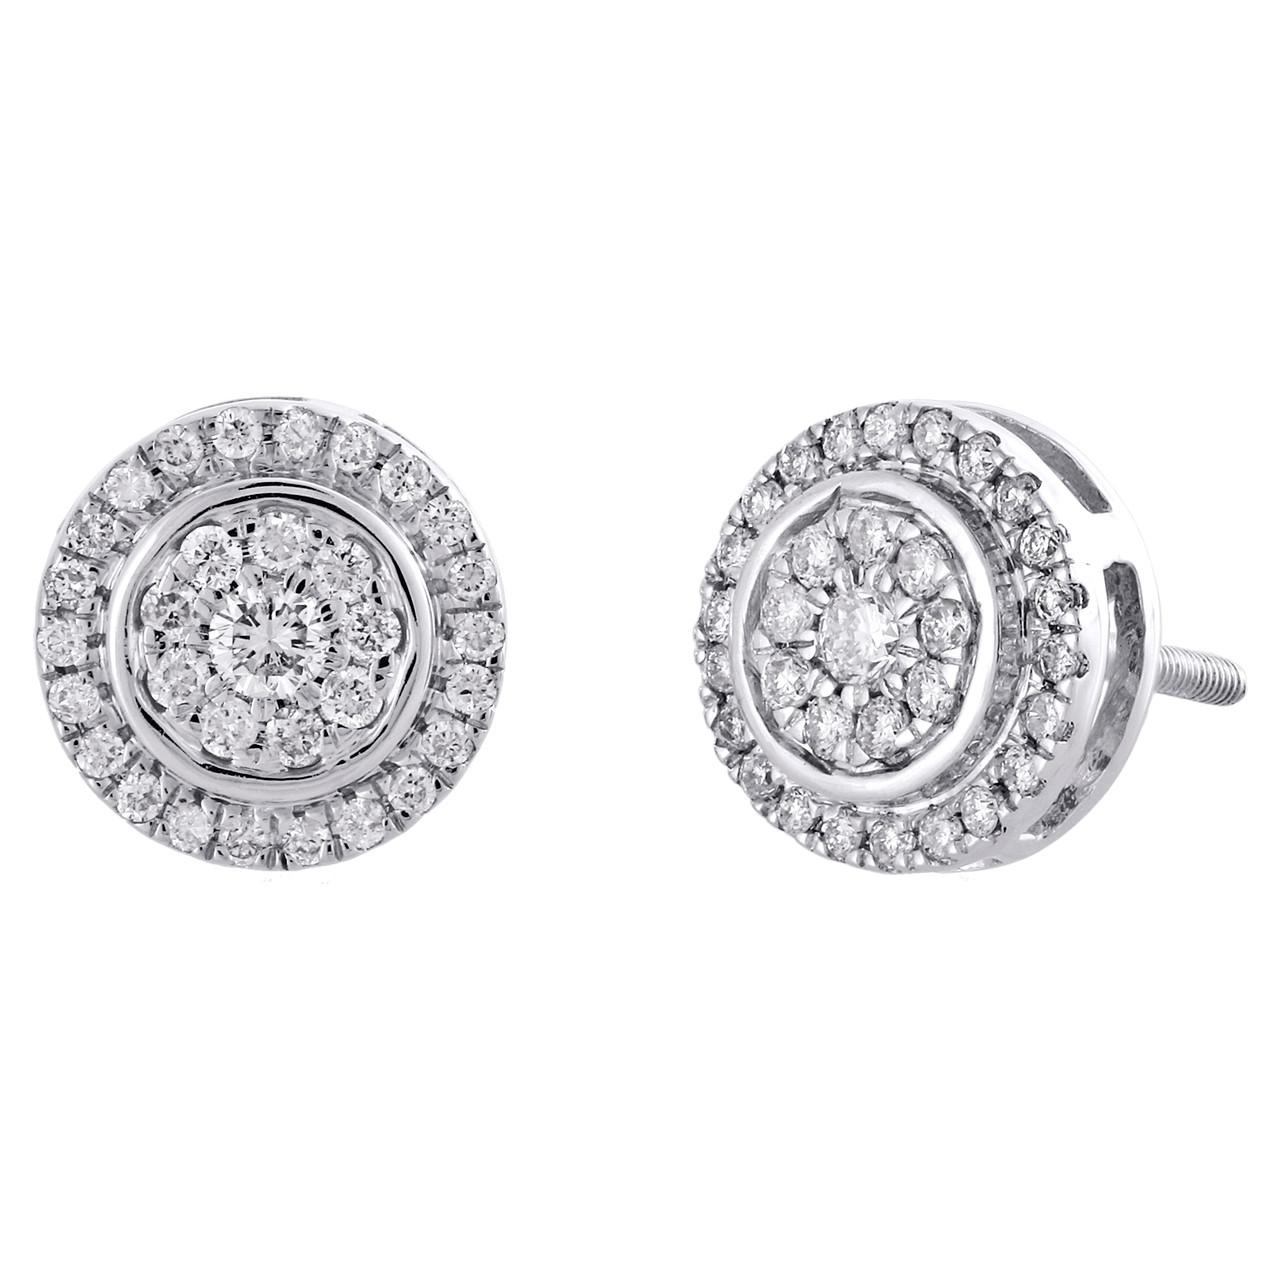 Round Diamond Flower Earrings